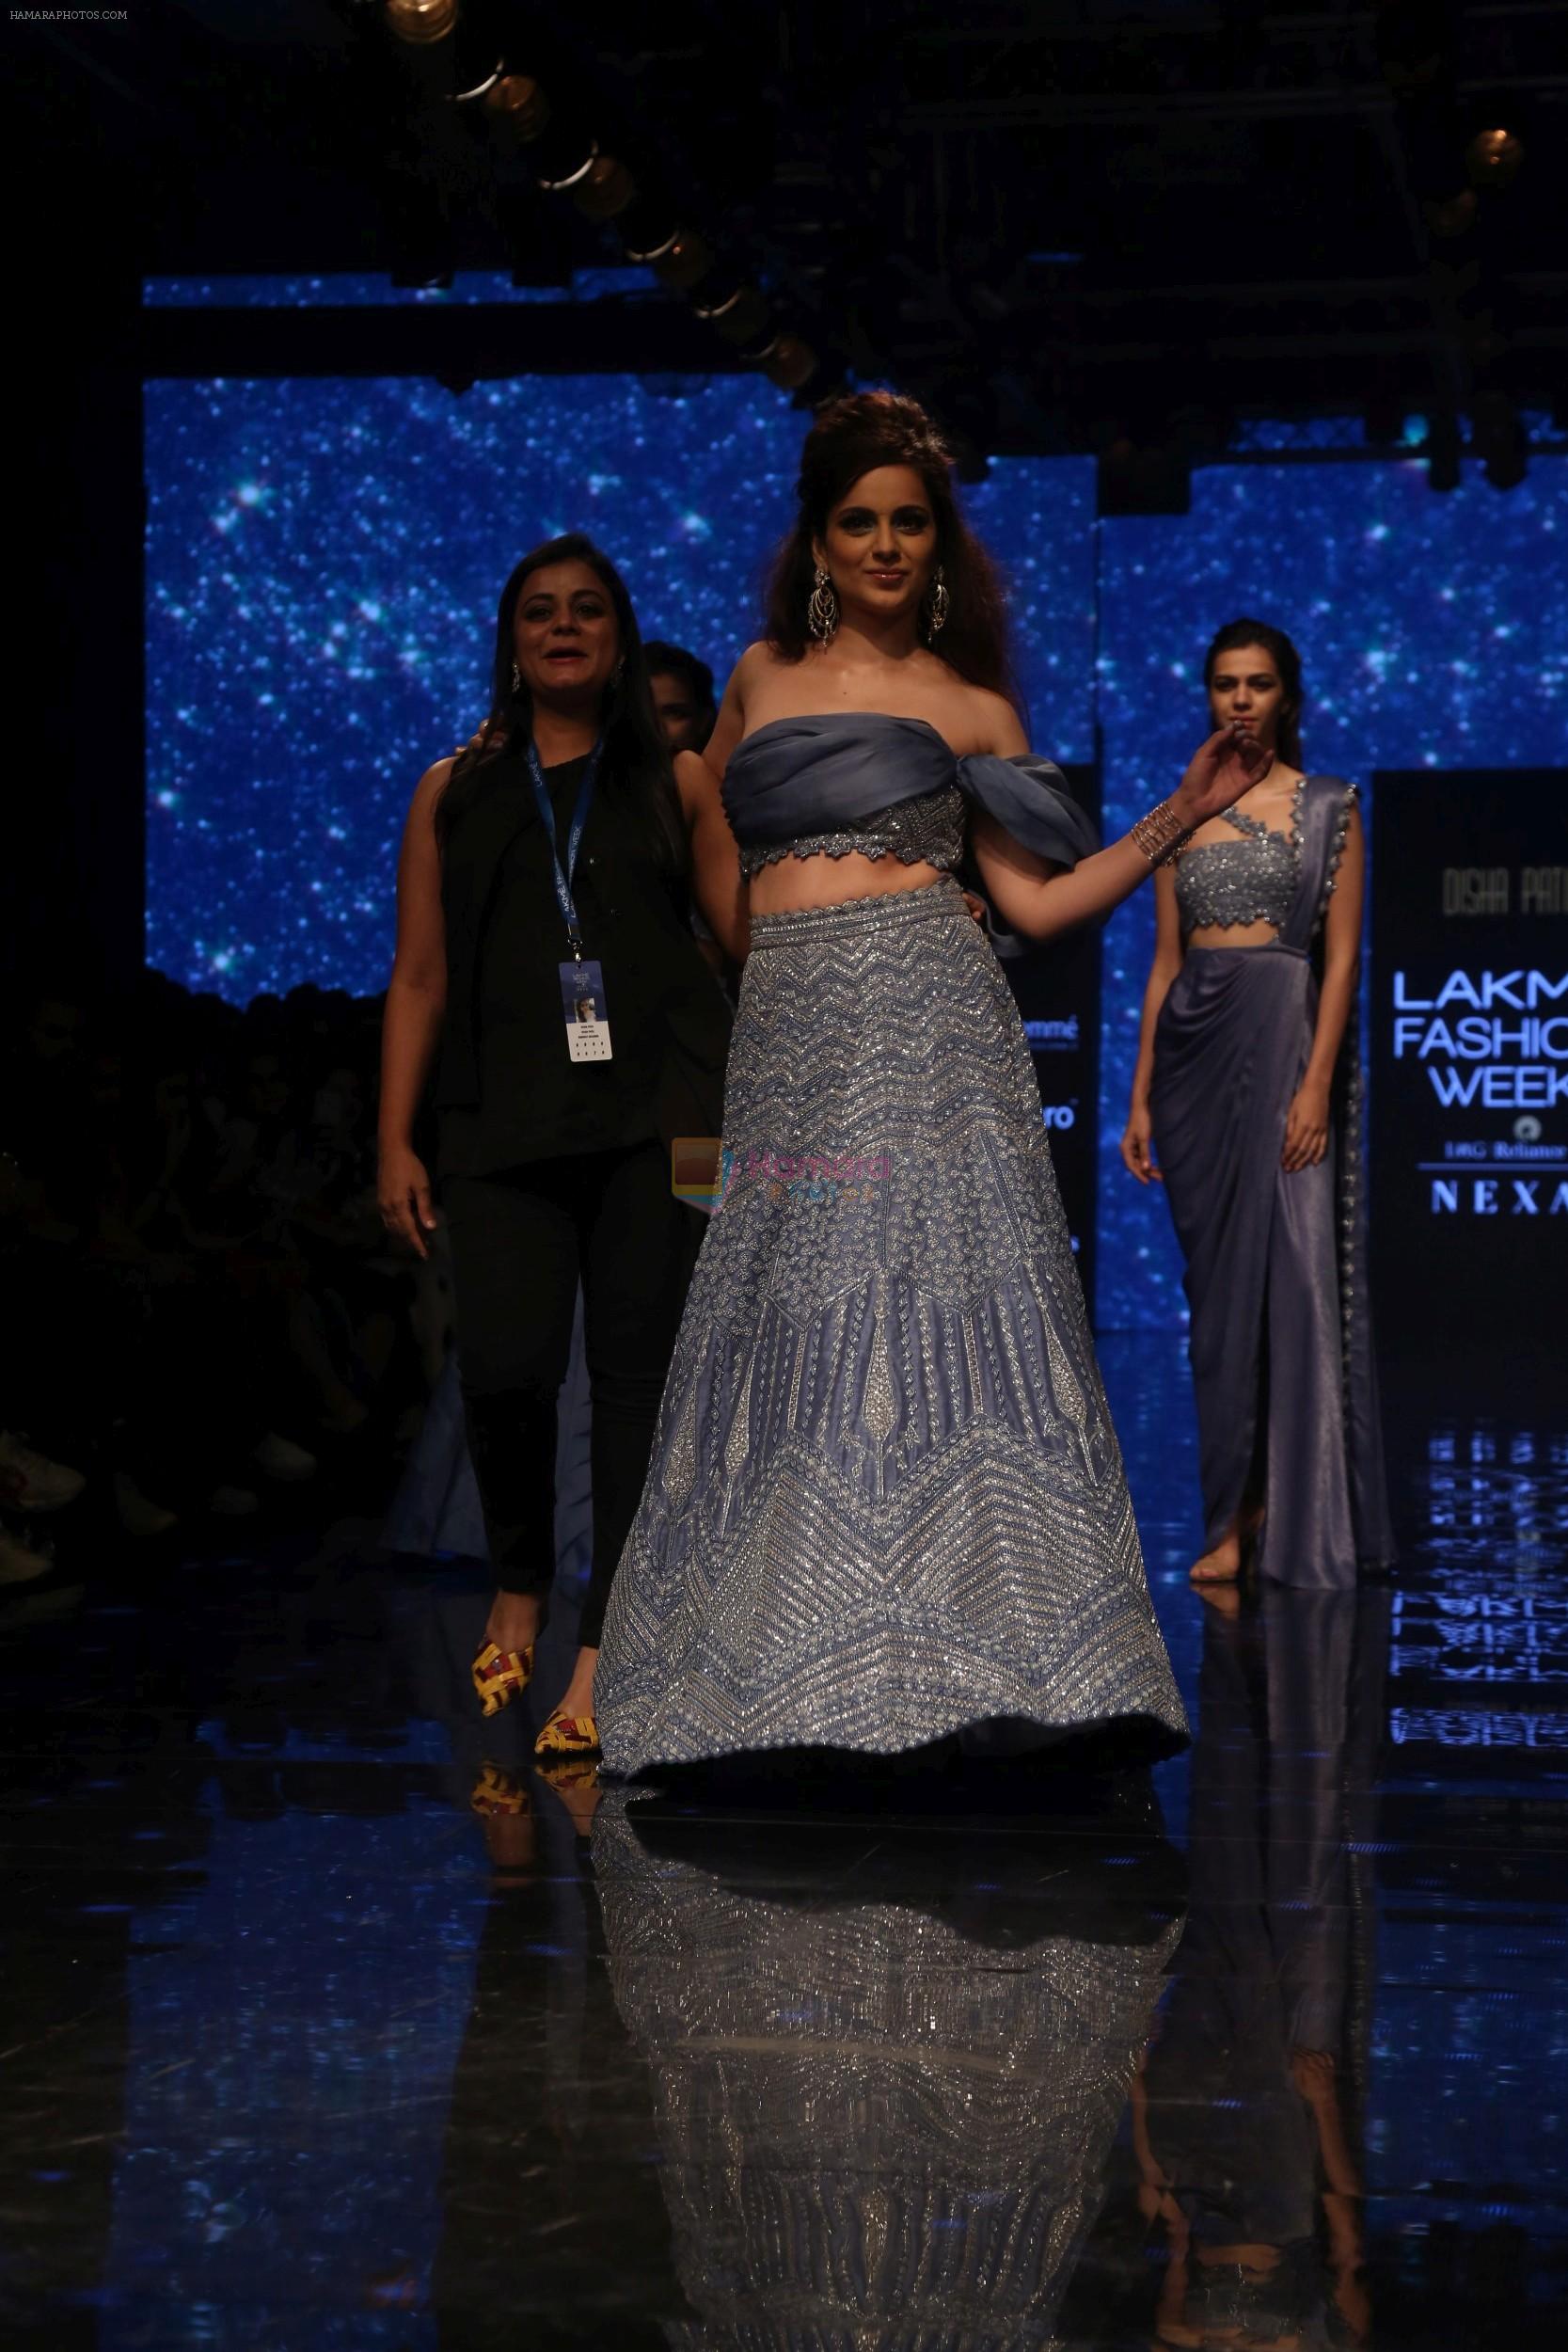 Kangana Ranaut walk the ramp for Disha Patil At lakme fashion week 2019 on 25th Aug 2019